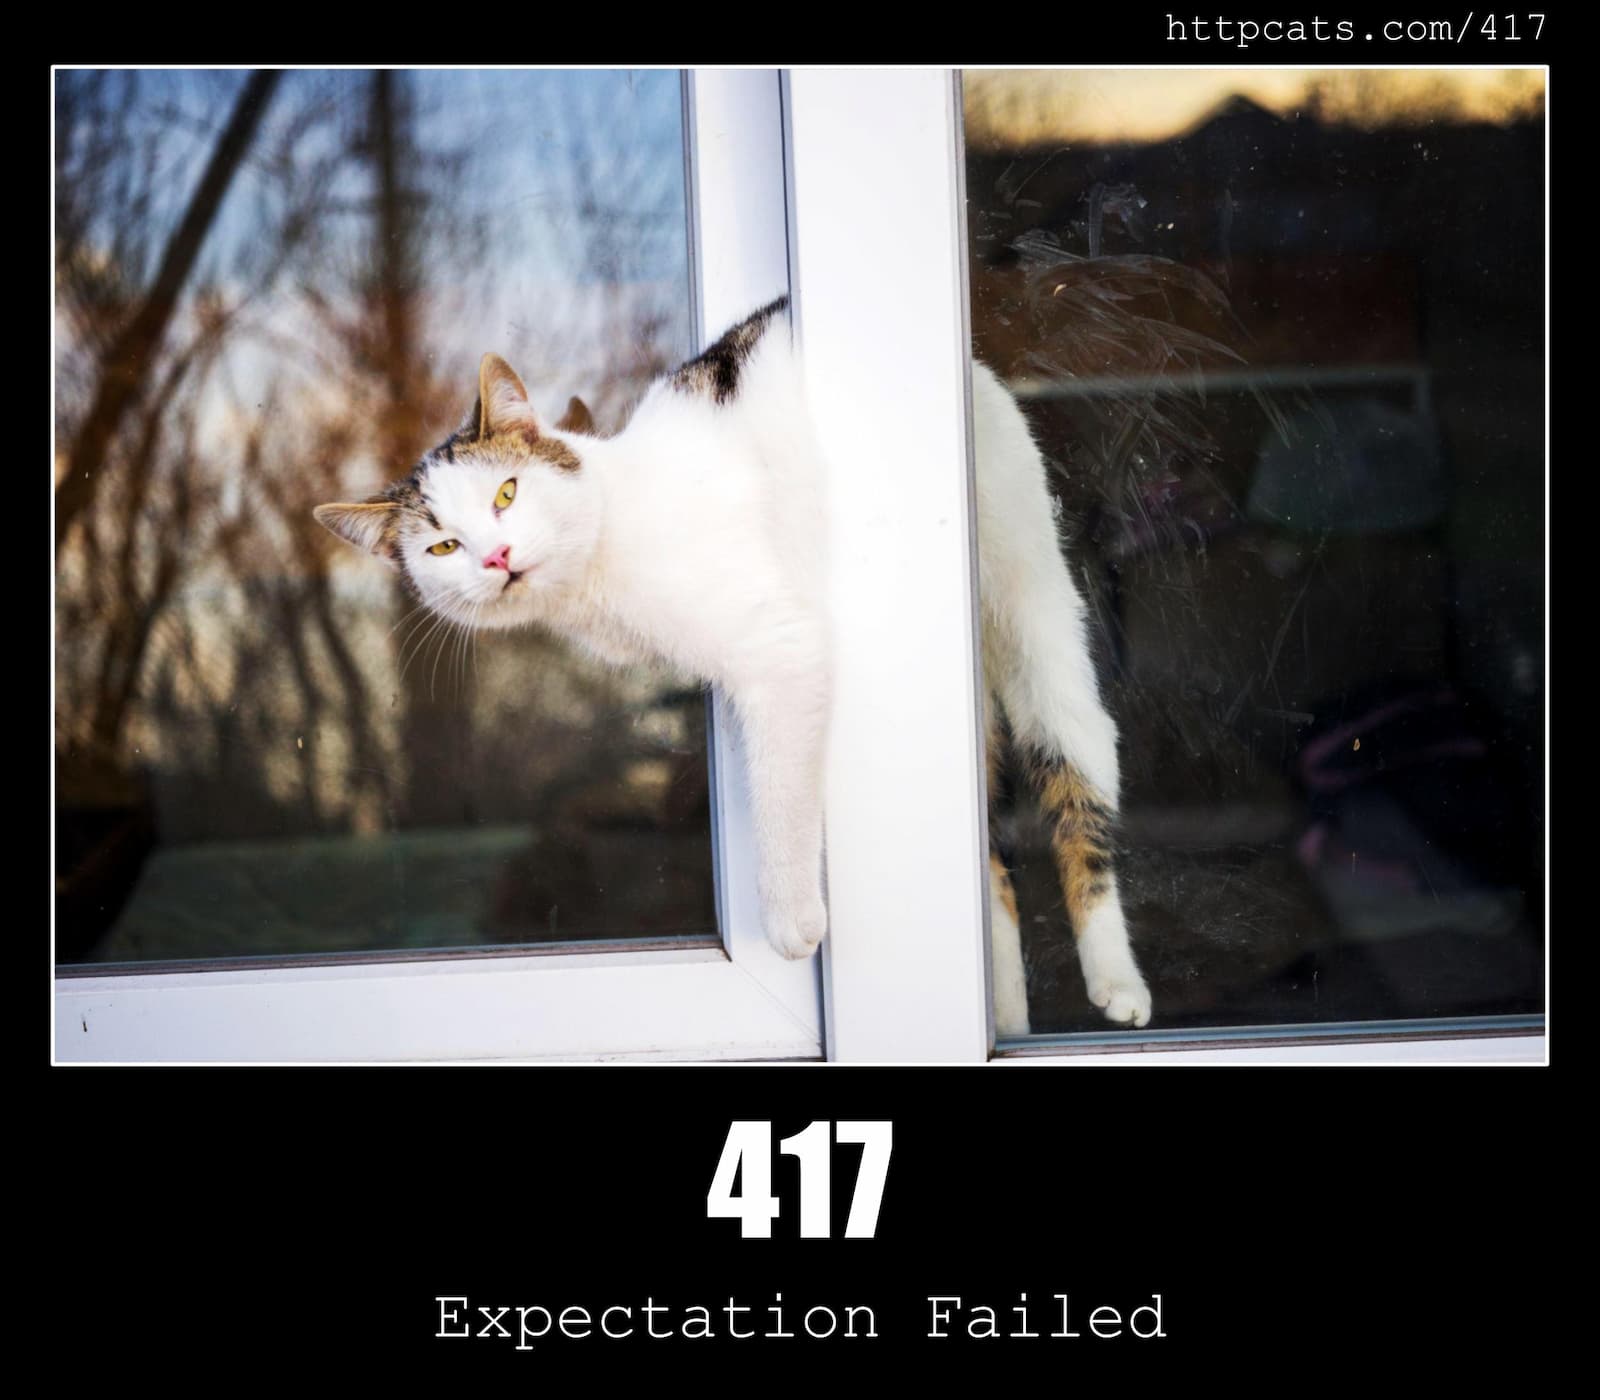 HTTP Status Code 417 Expectation Failed & Cats